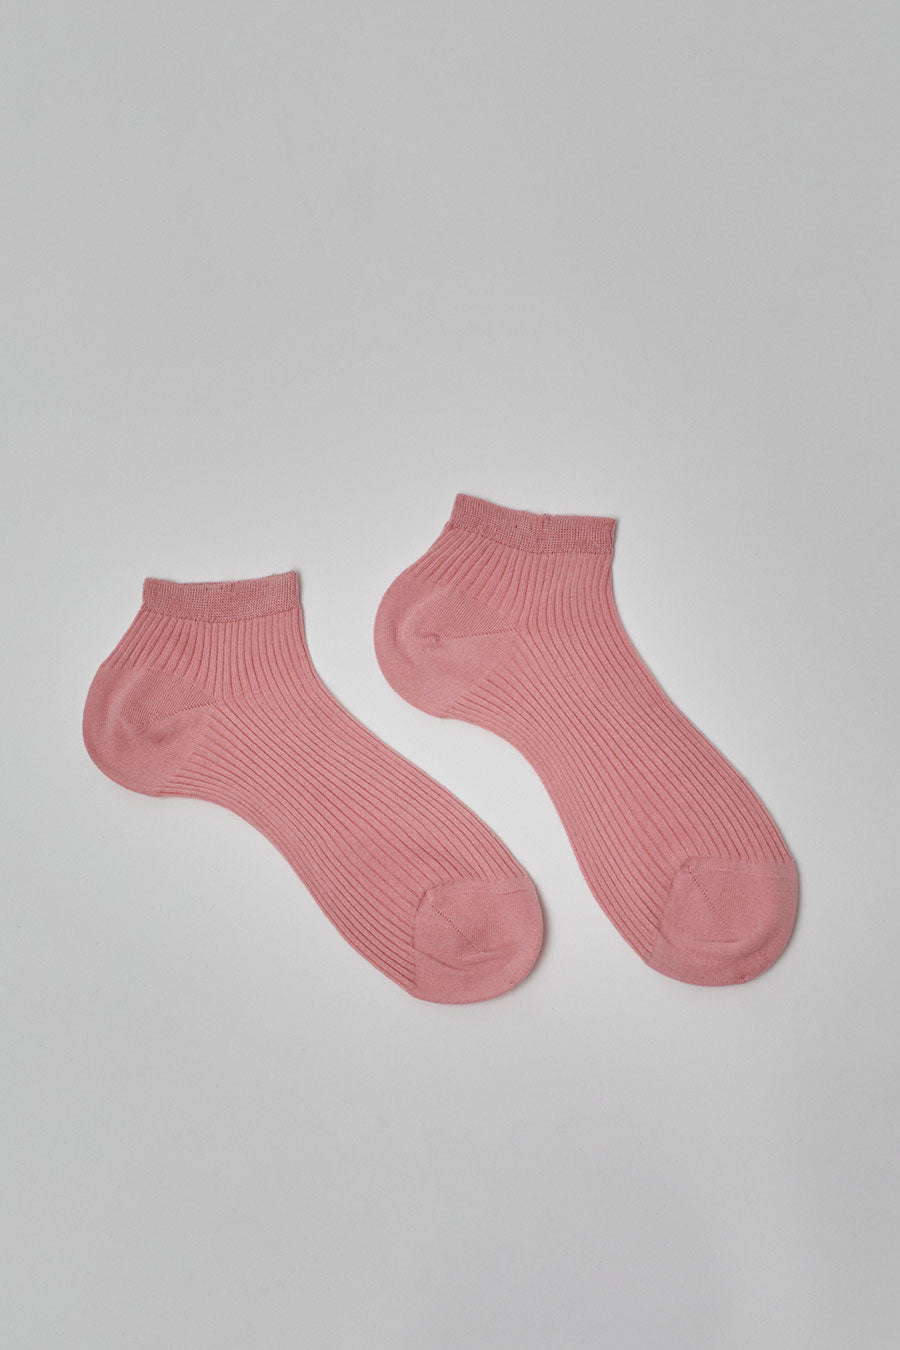 Maria La Rosa Organic Cotton Low Ankle Socks in Rose